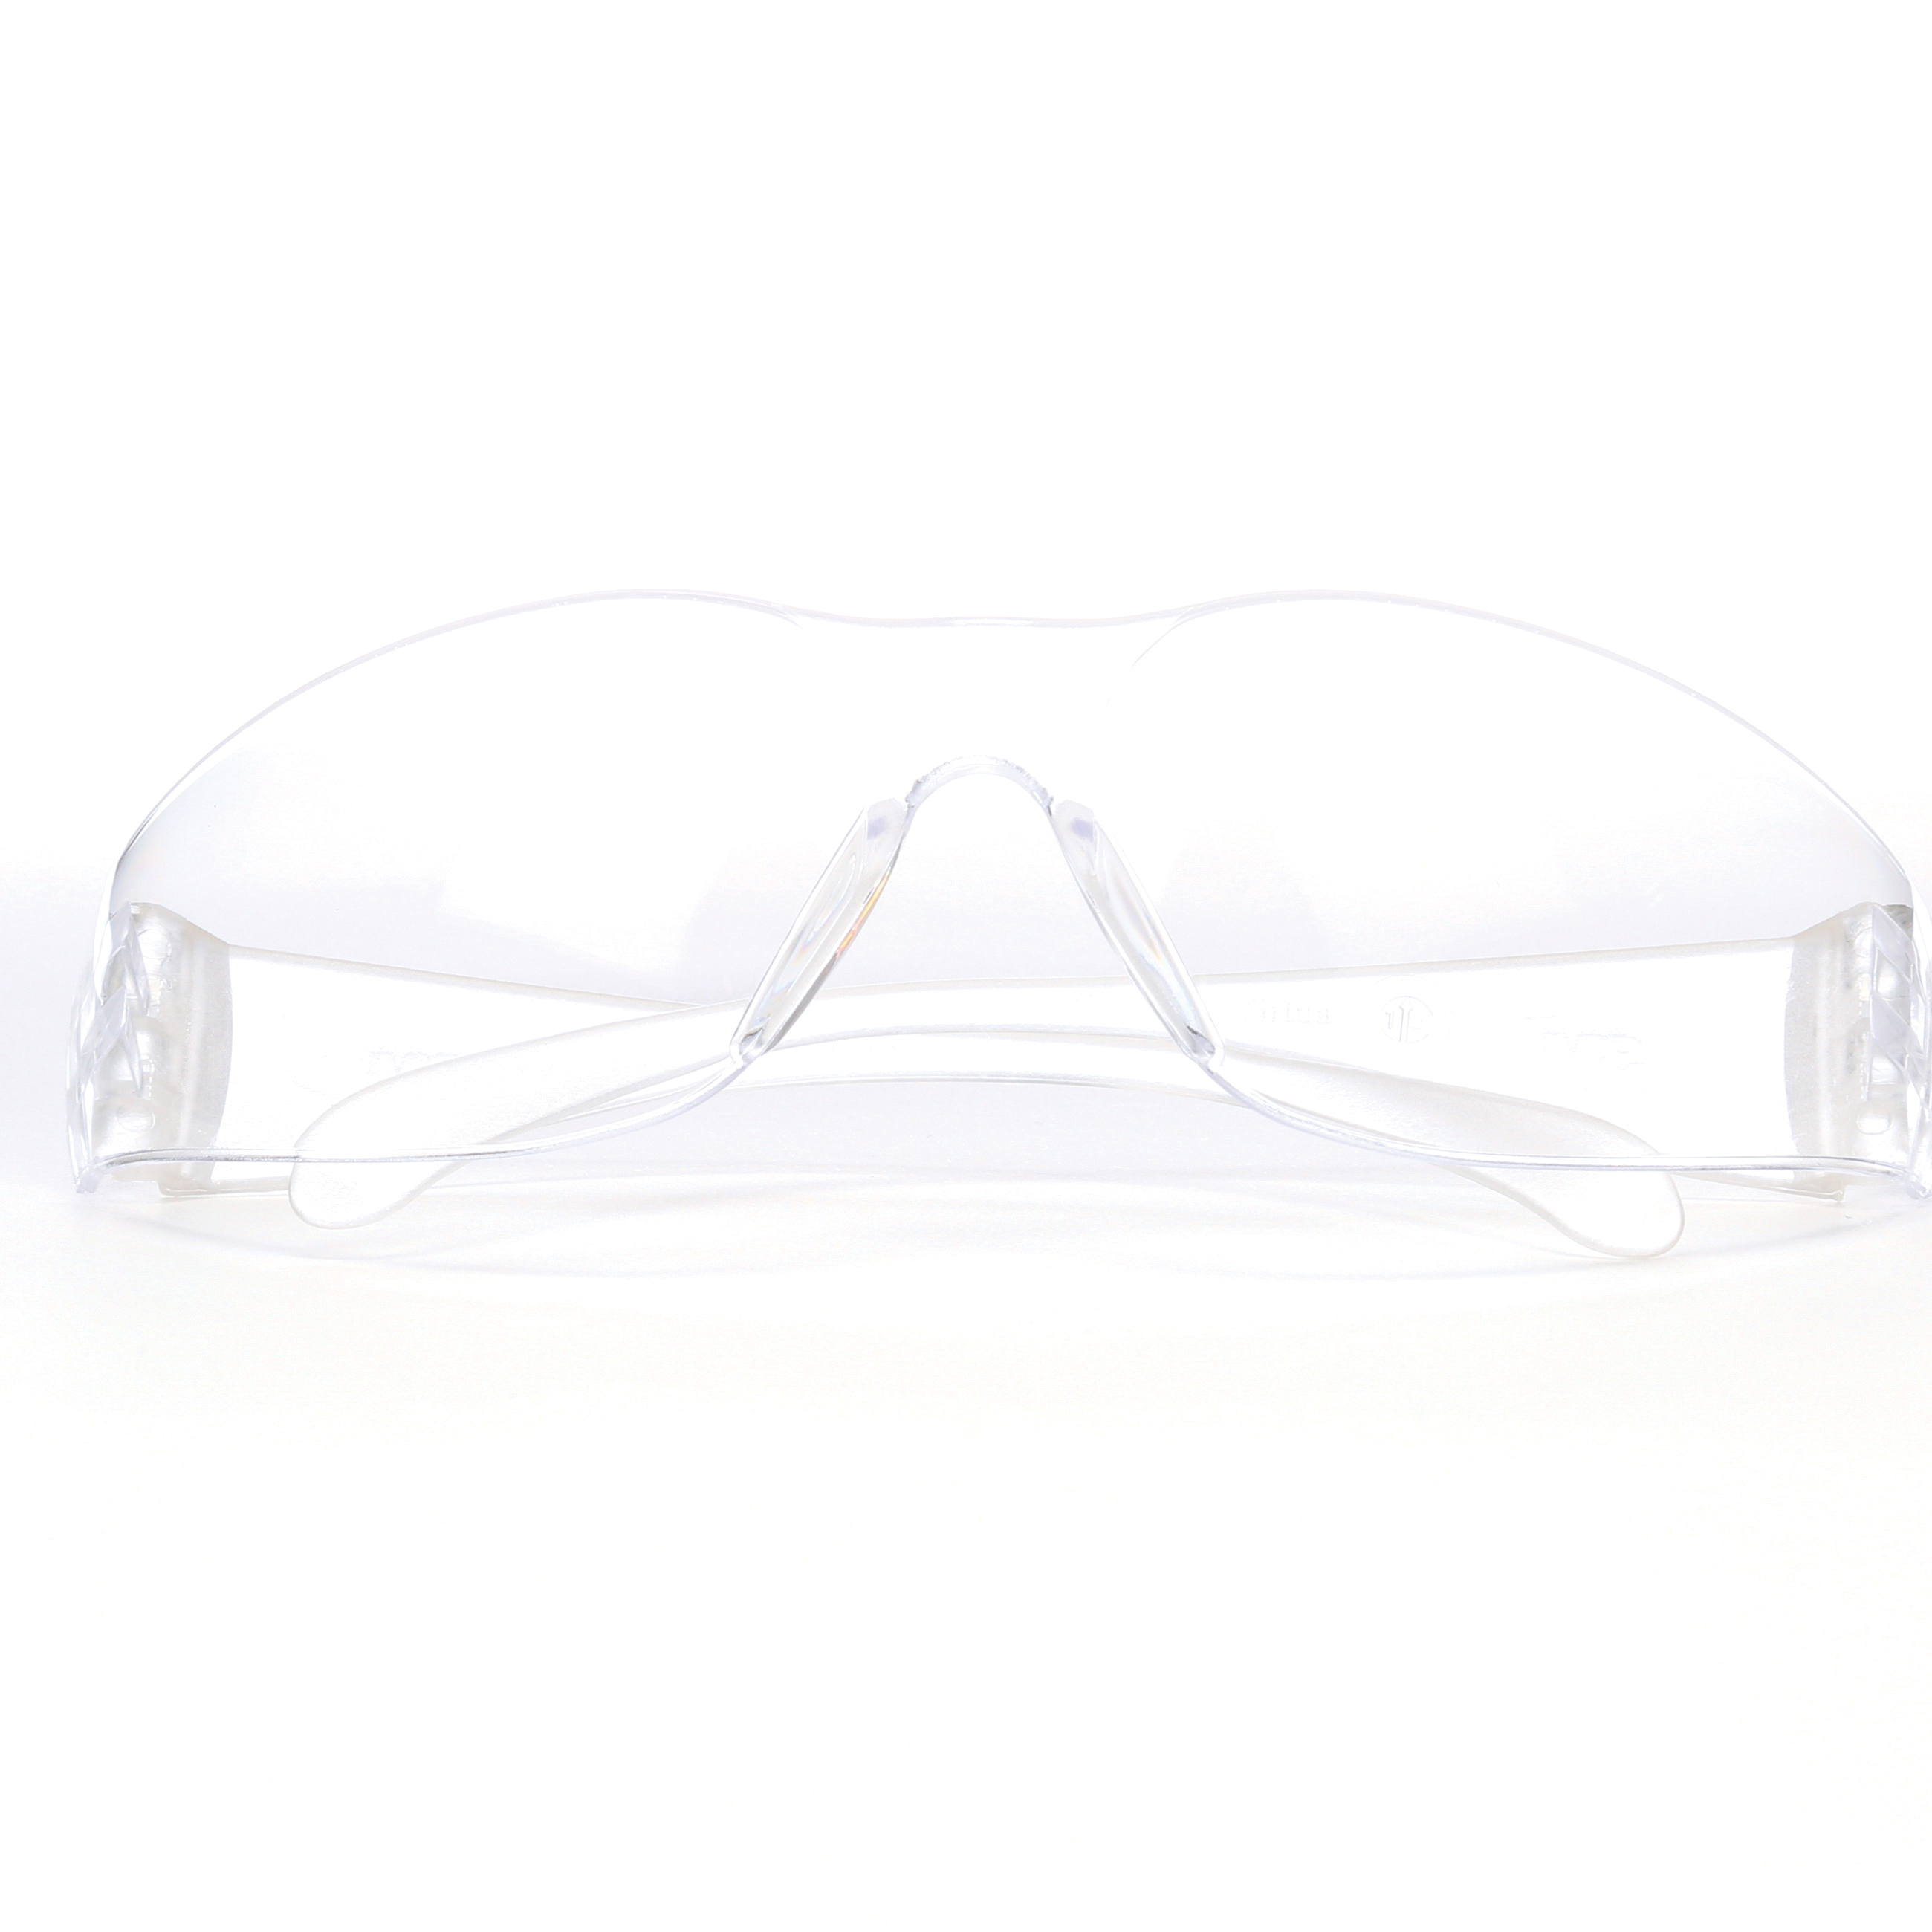 3M™ Virtua™ 078371-62099 Economy Lightweight Protective Eyewear, Anti-Scratch/Hard Coat, Clear Lens, Frameless/Wrap Around Frame, Clear, Polycarbonate Frame, Polycarbonate Lens, ANSI Z87.1-2015